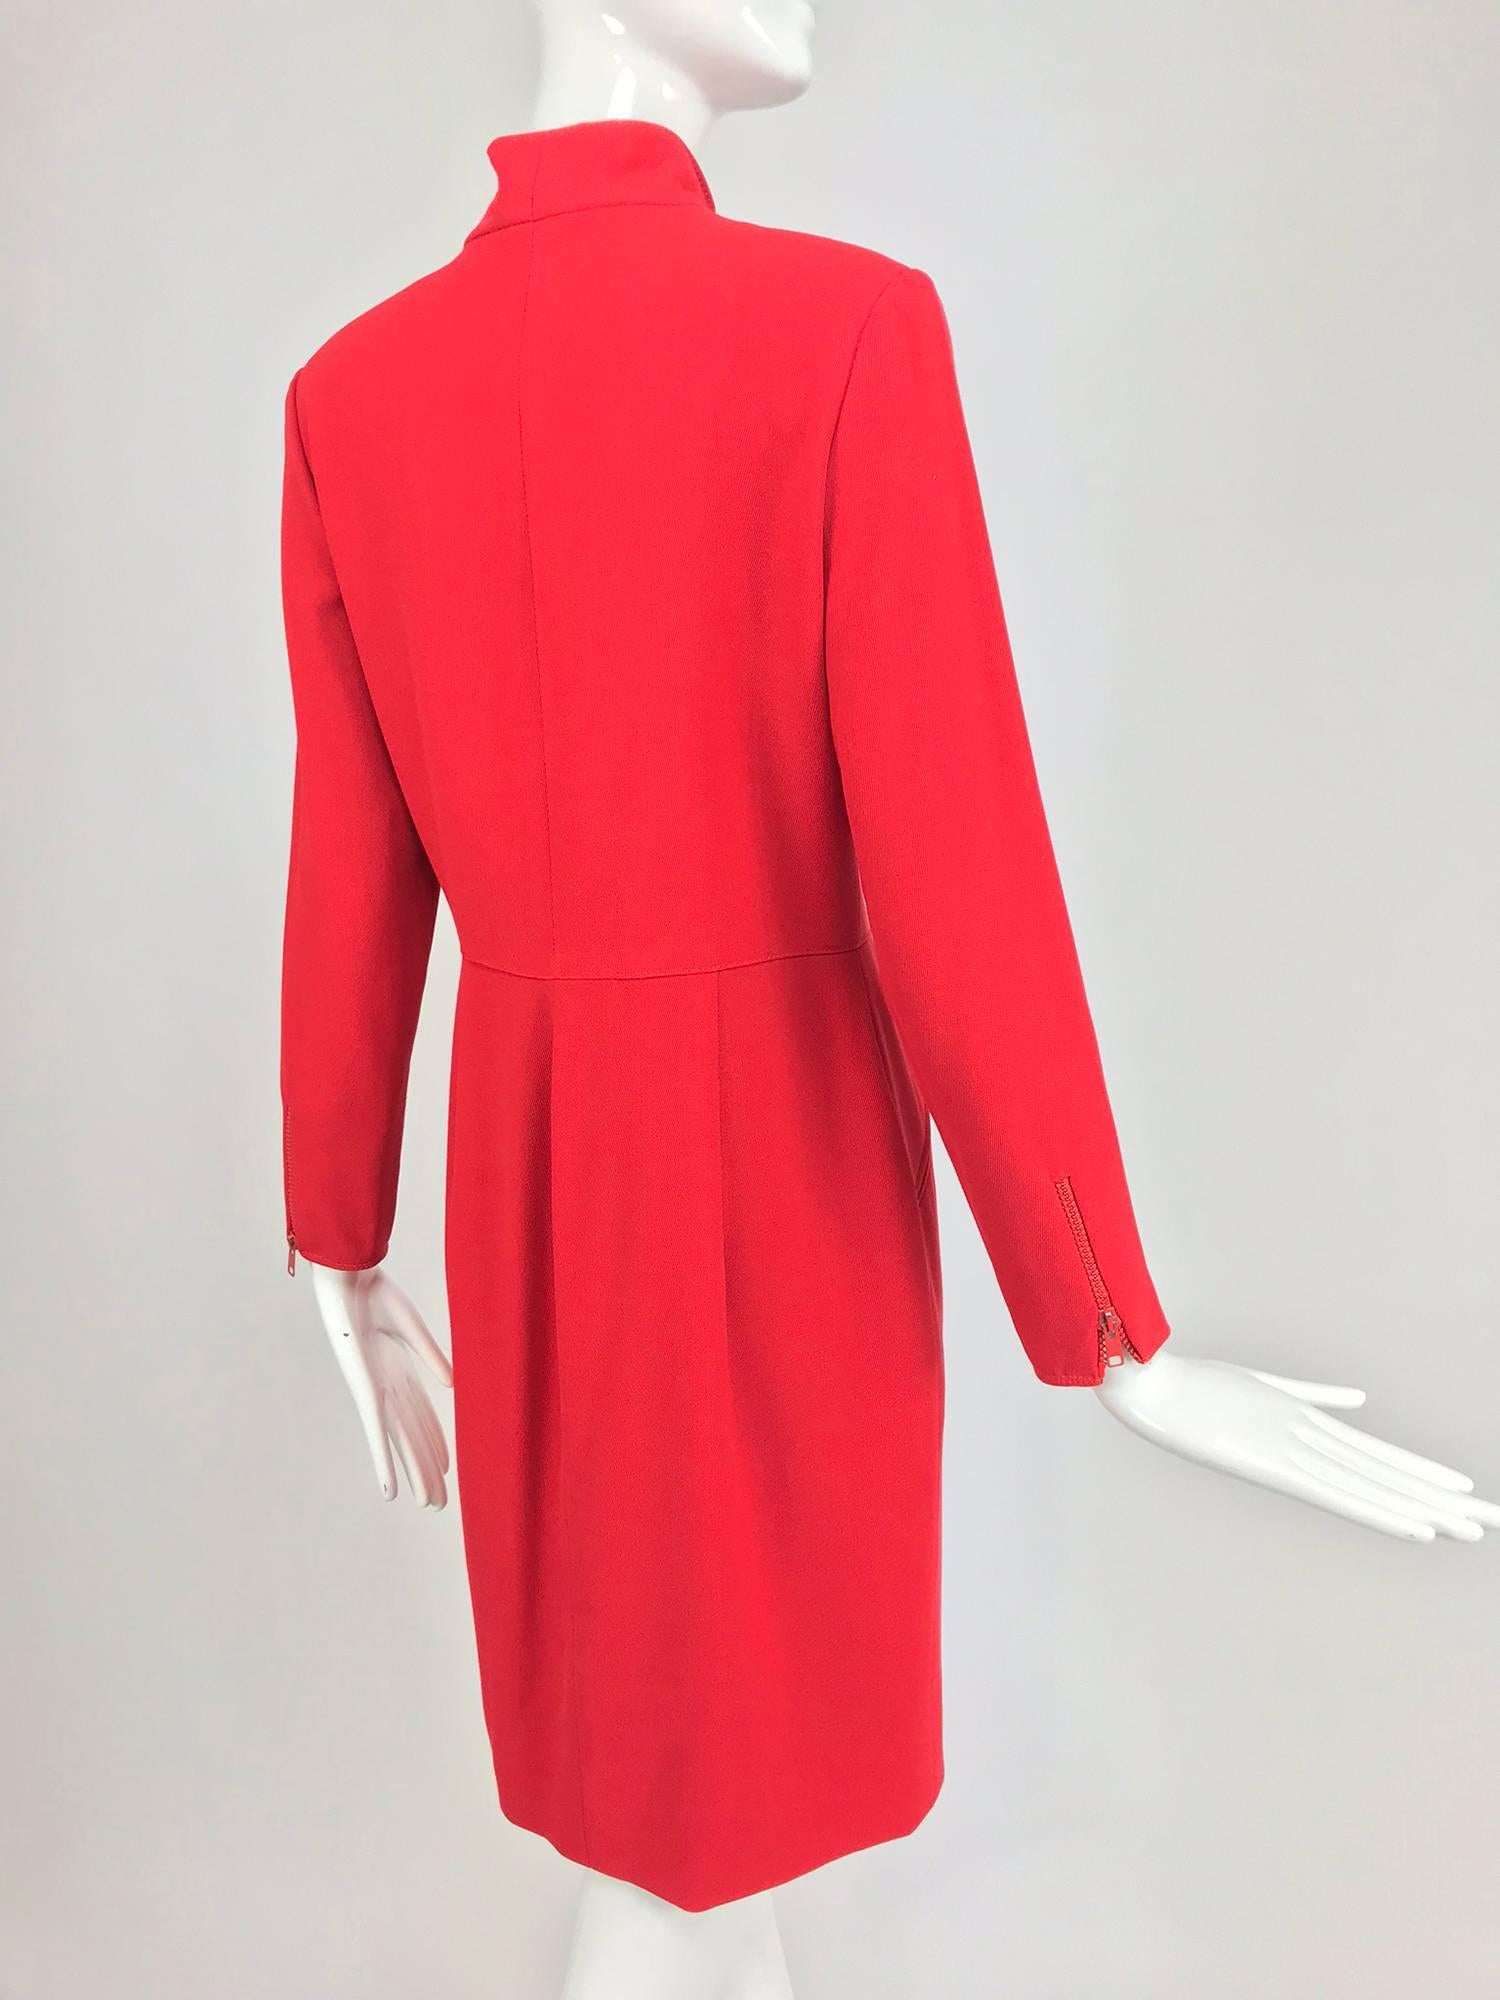 Women's Valentino Vintage tailored red wool twill big zipper dress 1990s